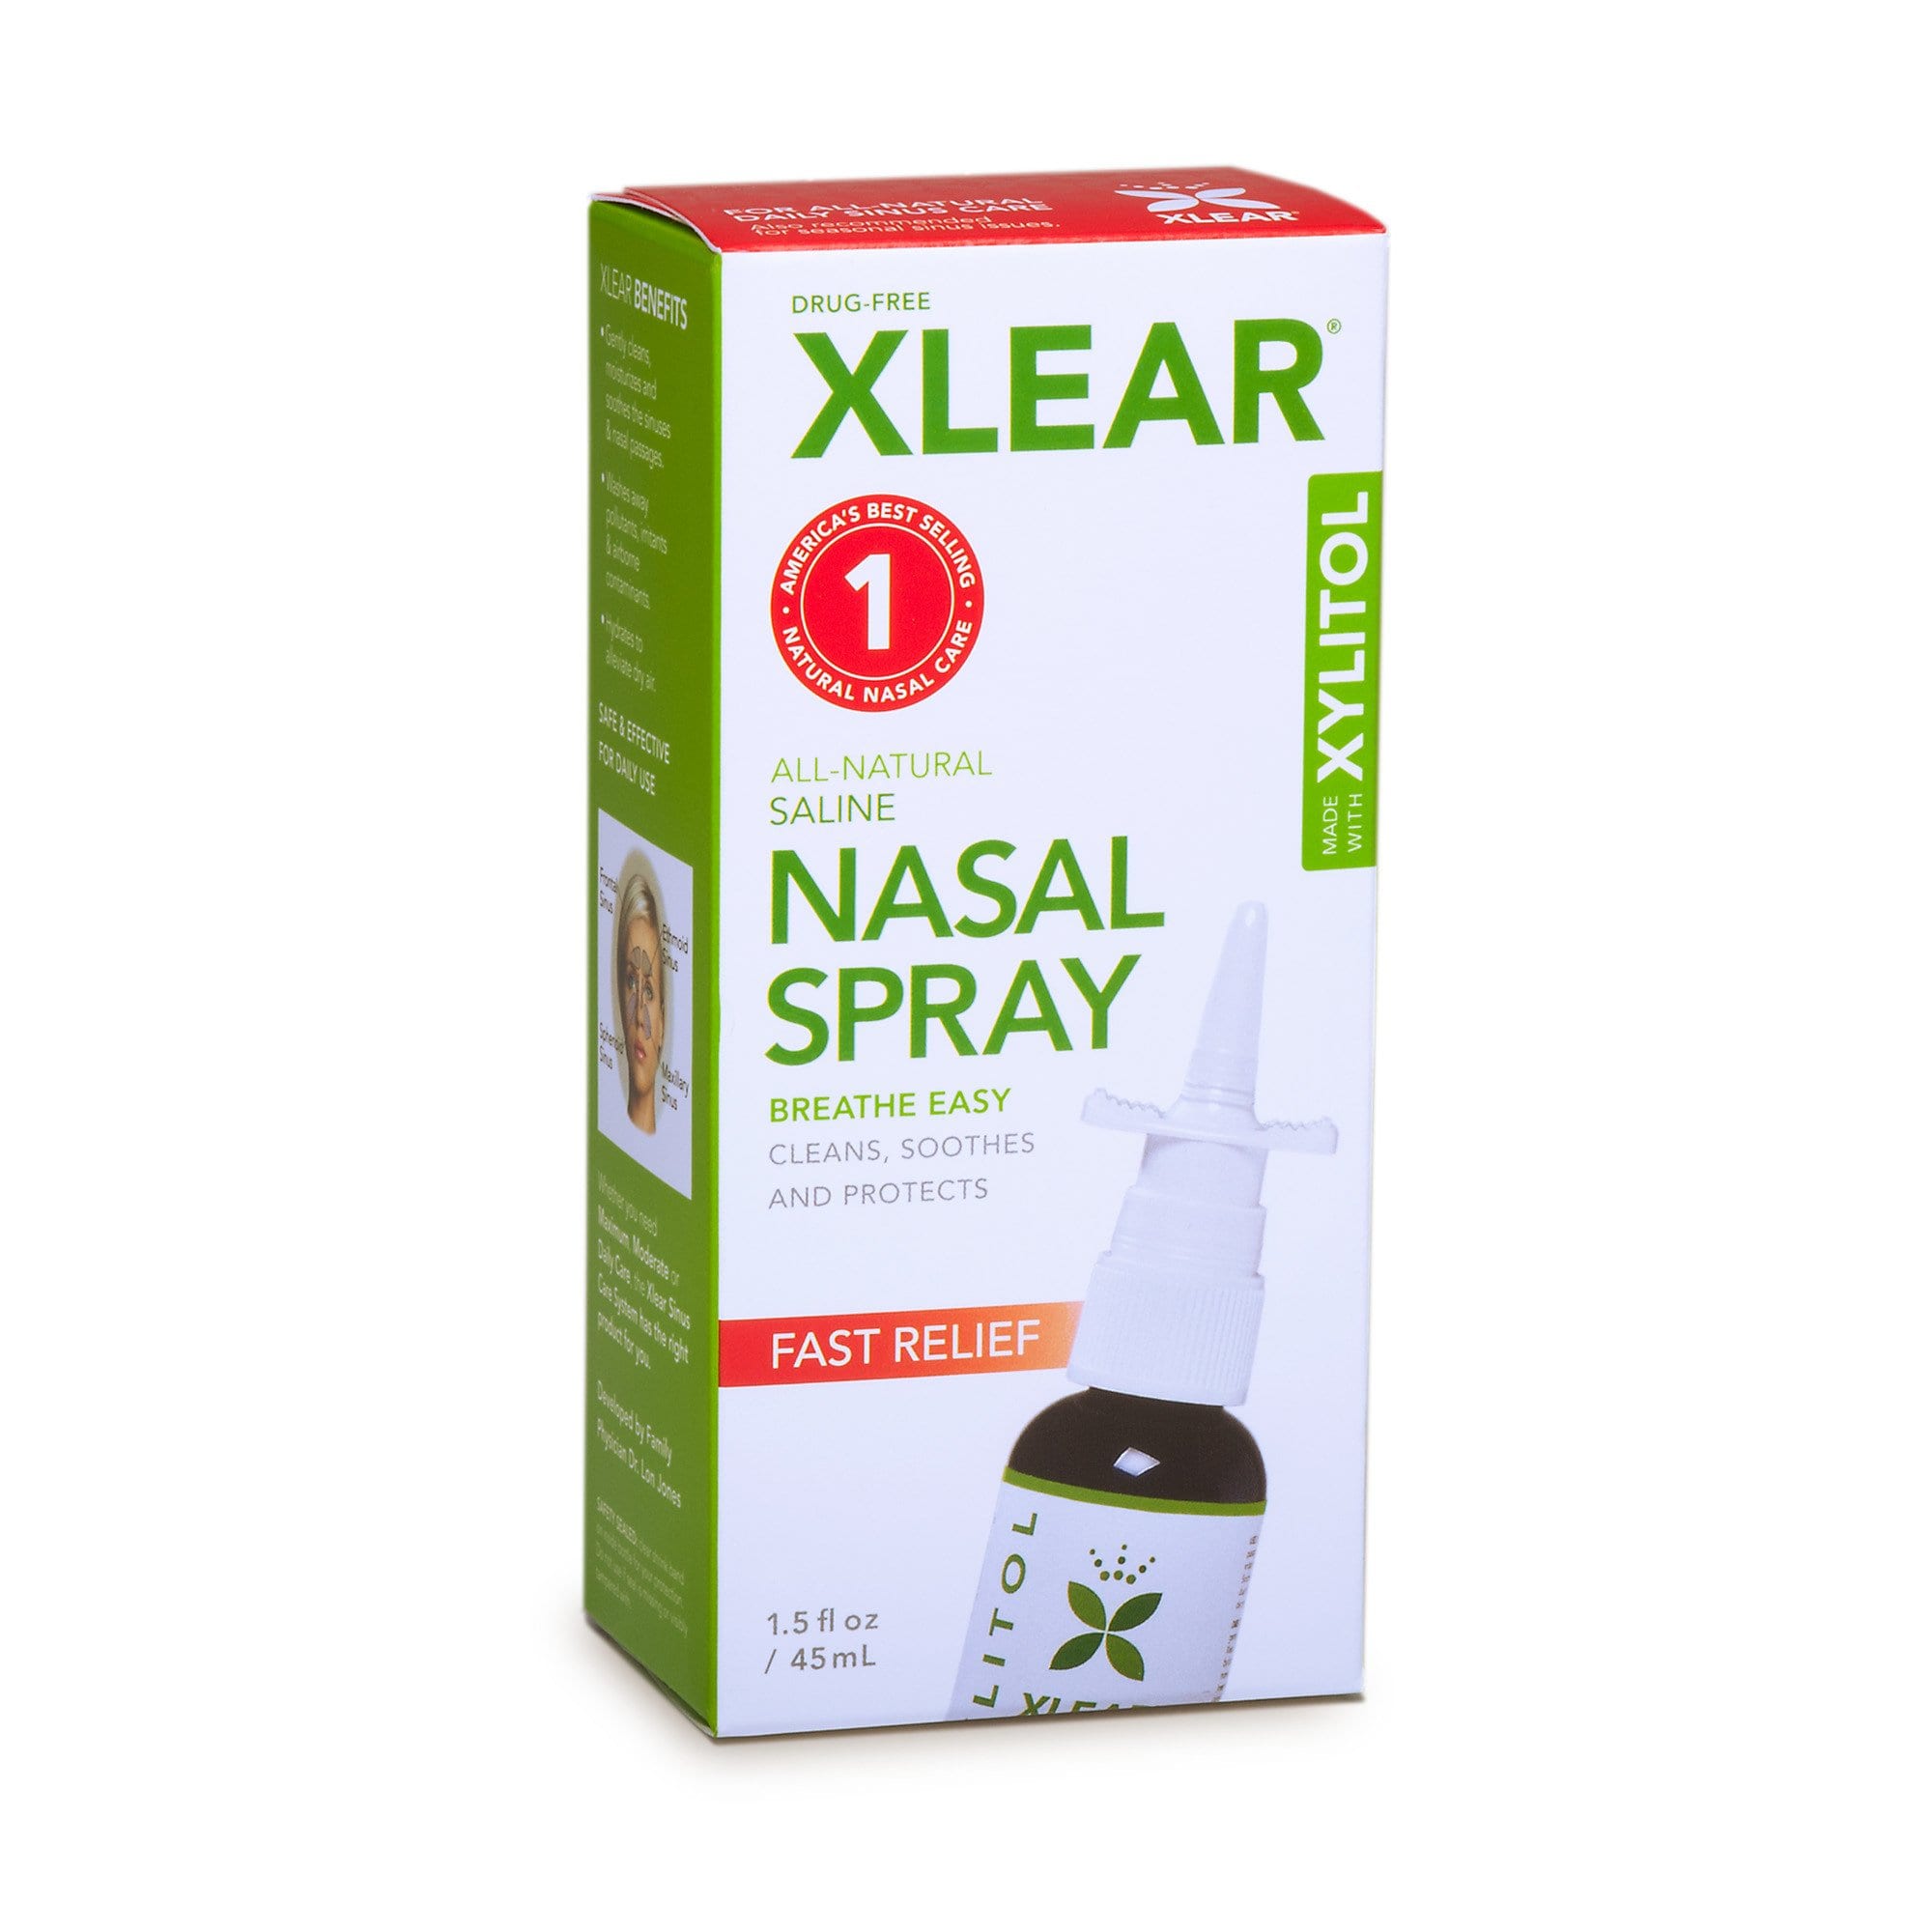 XLEAR Nasal Spray